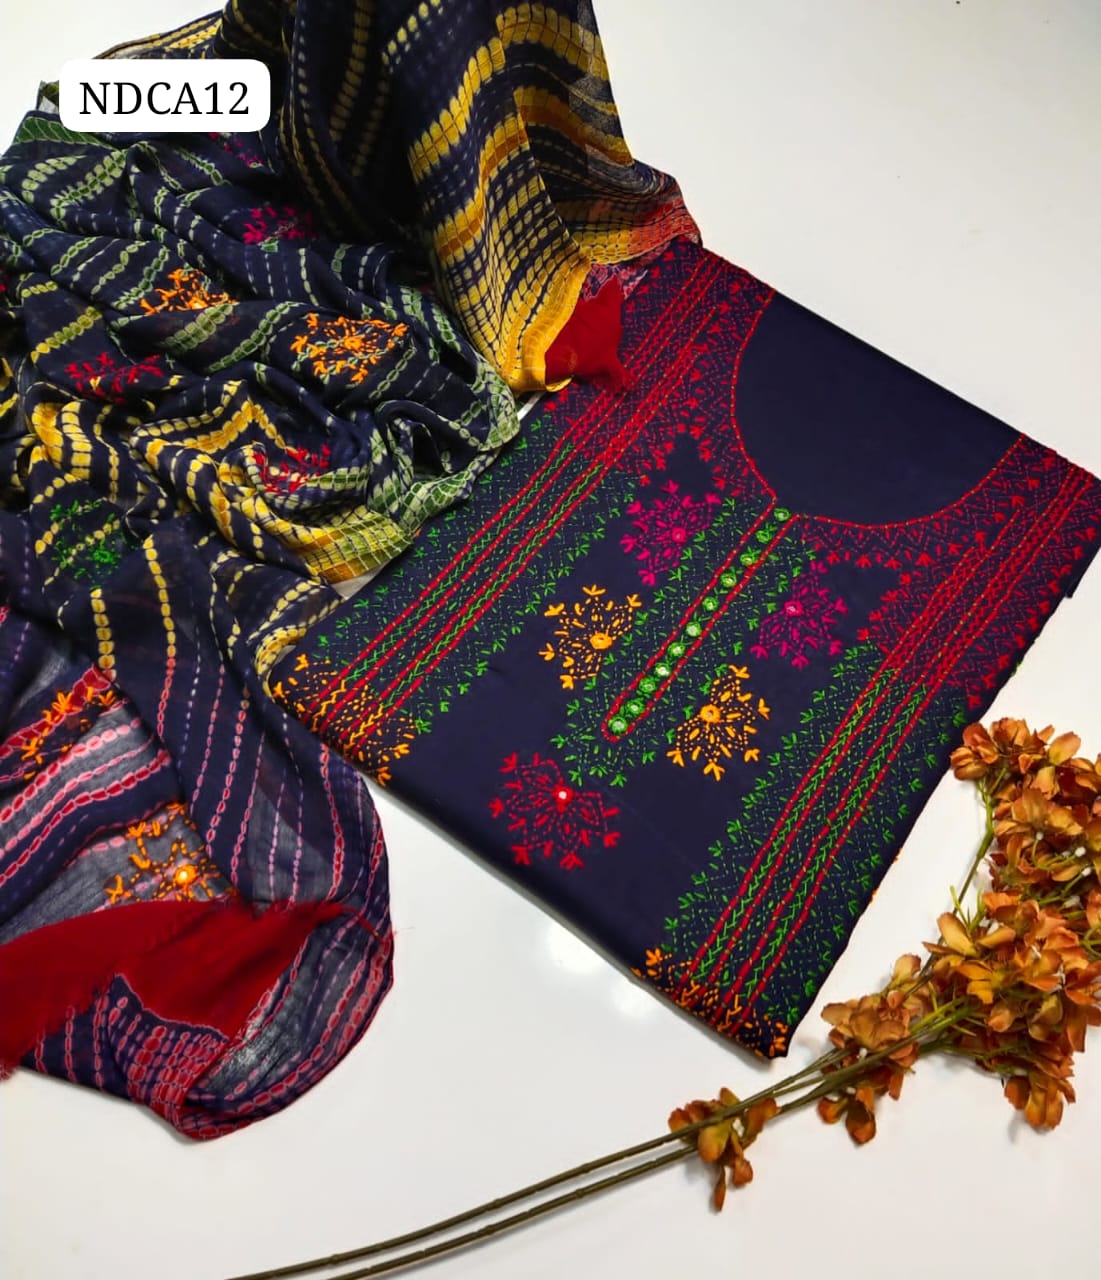 Pure Lawn Fabric Hande Made Afghani Gala Jall Neat Work Botiq Style Work Shirt With Embroidery Chiffon Crush Tei & Dei Dupatta And Plain Lawn Trouser 3Pc Dress